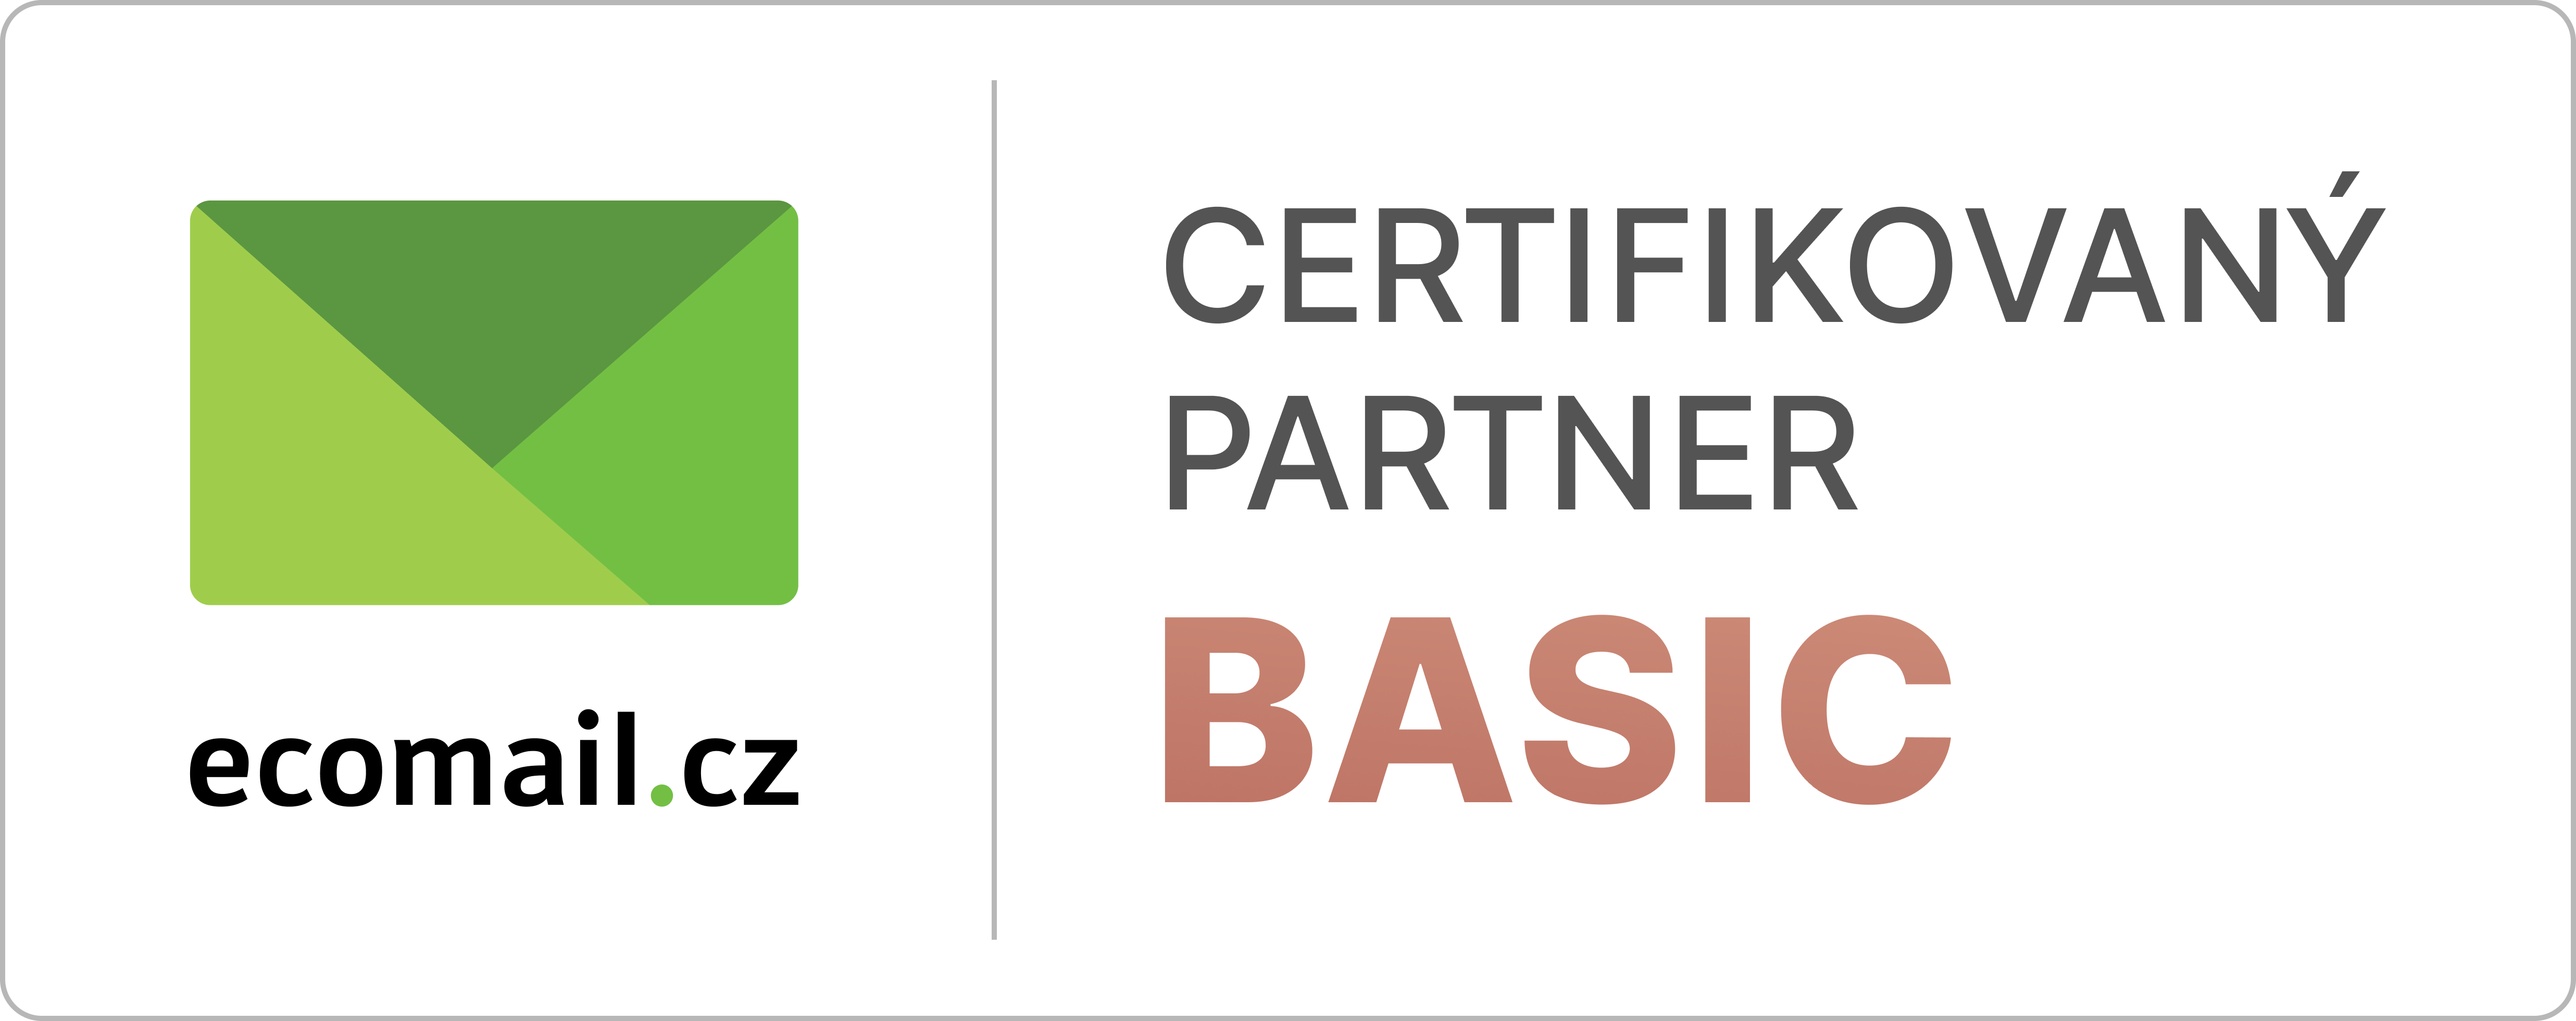 Certification Partner Ecomail.cz